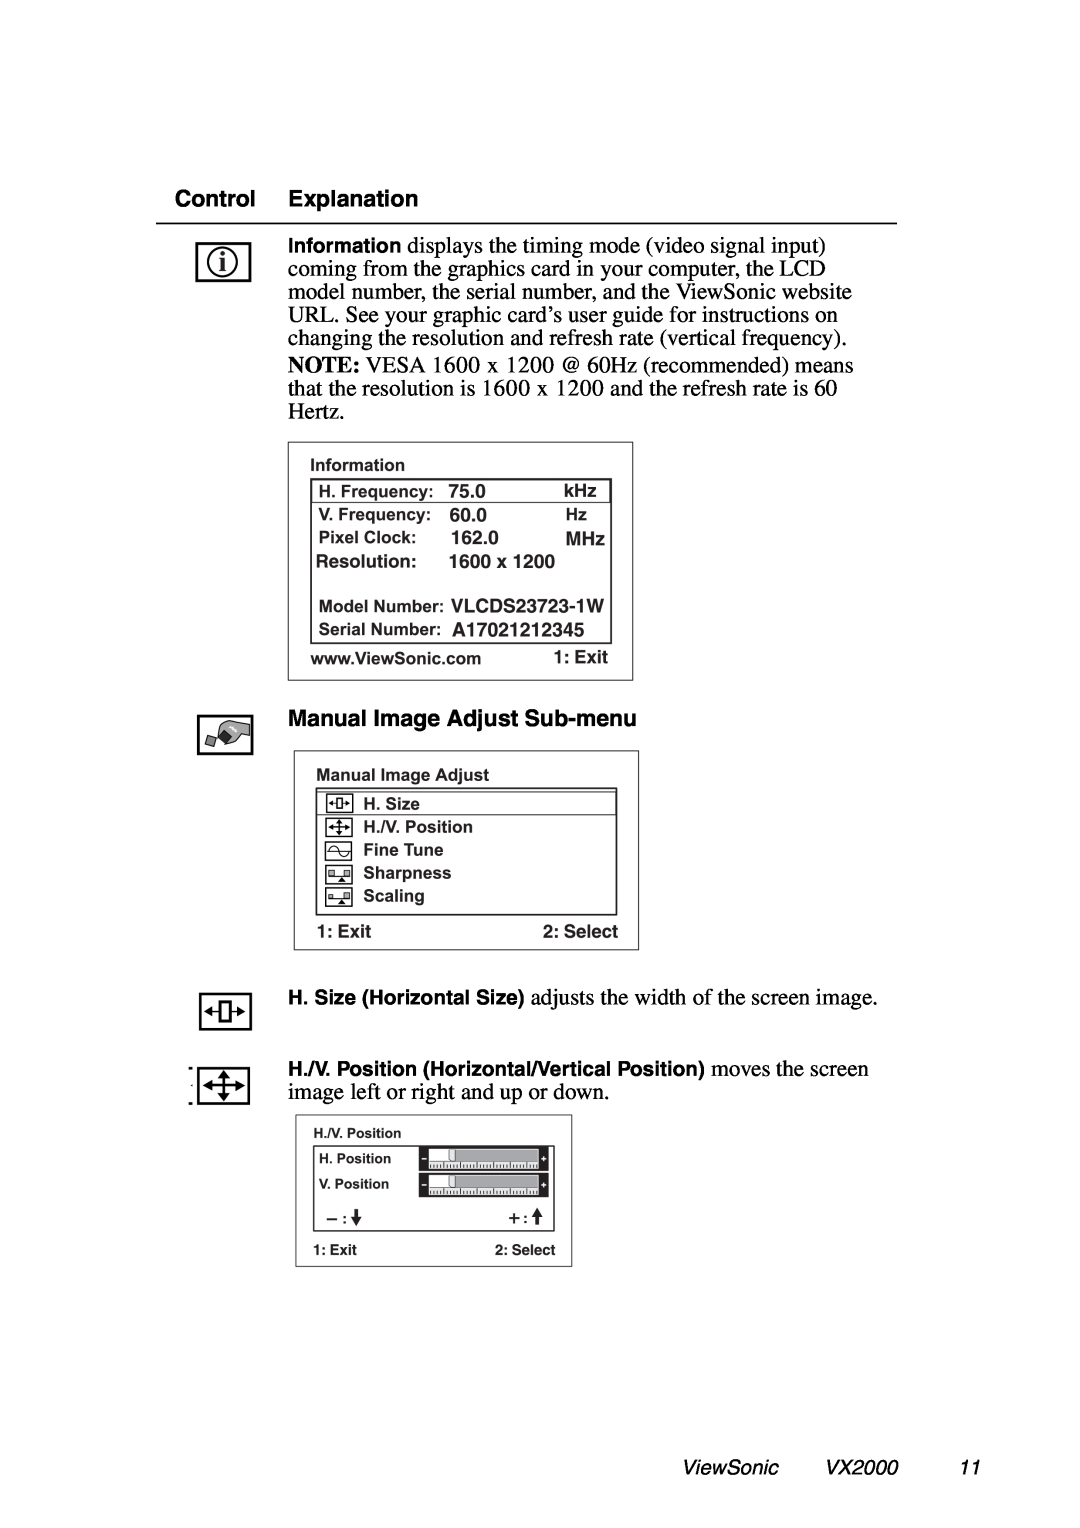 ViewSonic VX2000 manual Manual Image Adjust Sub-menu, Control Explanation 